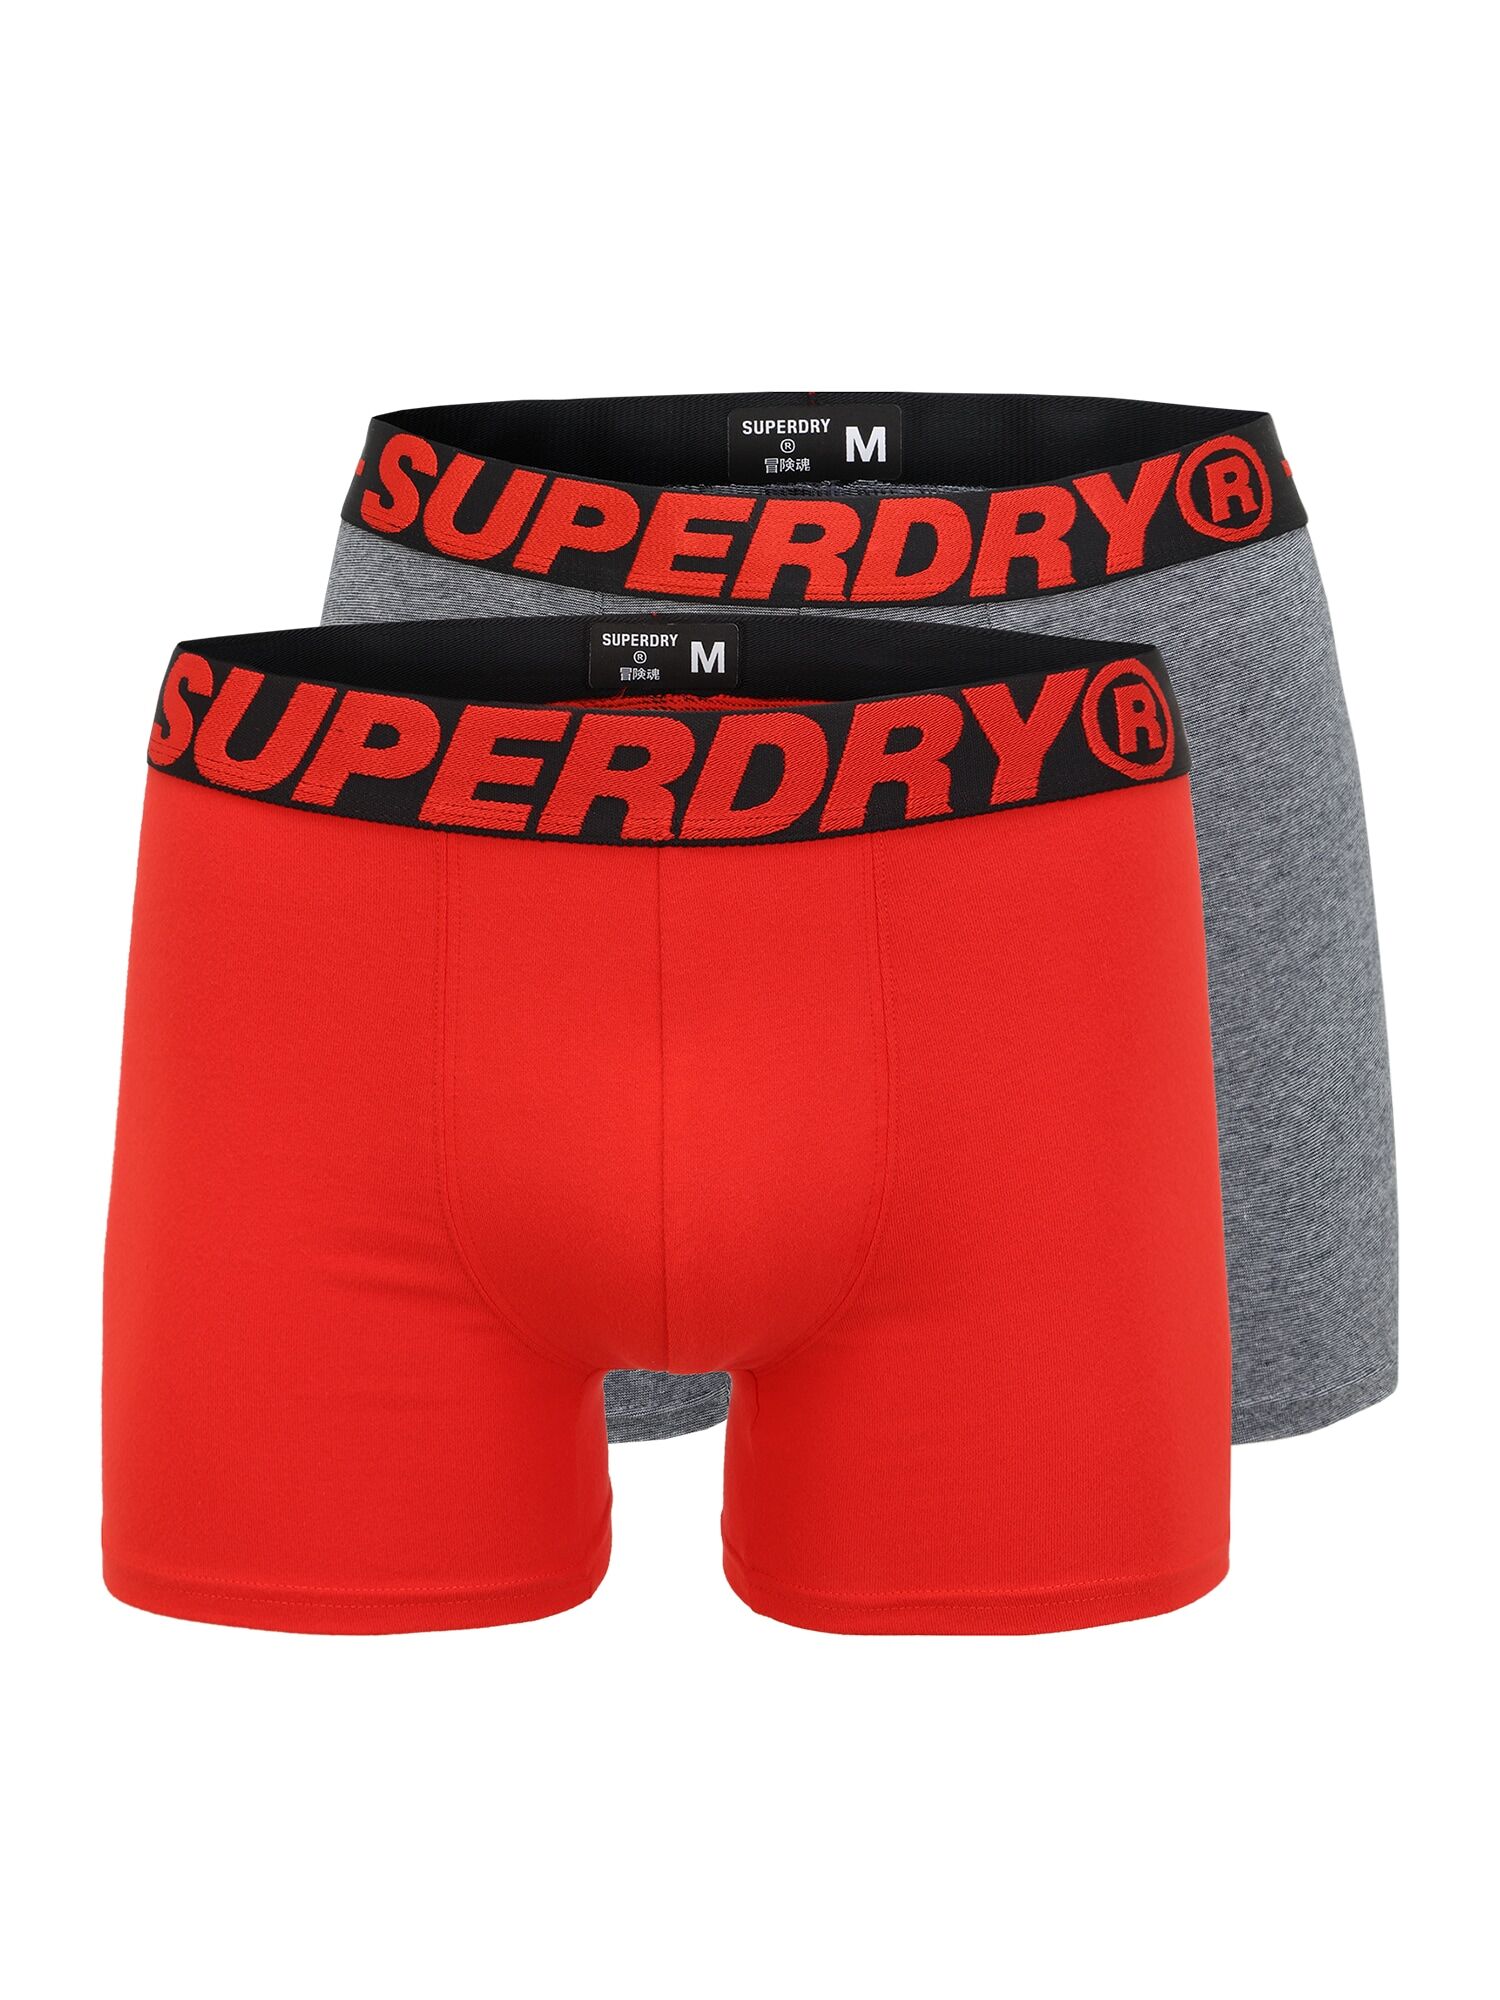 Superdry Boxer Grigio, Rosso